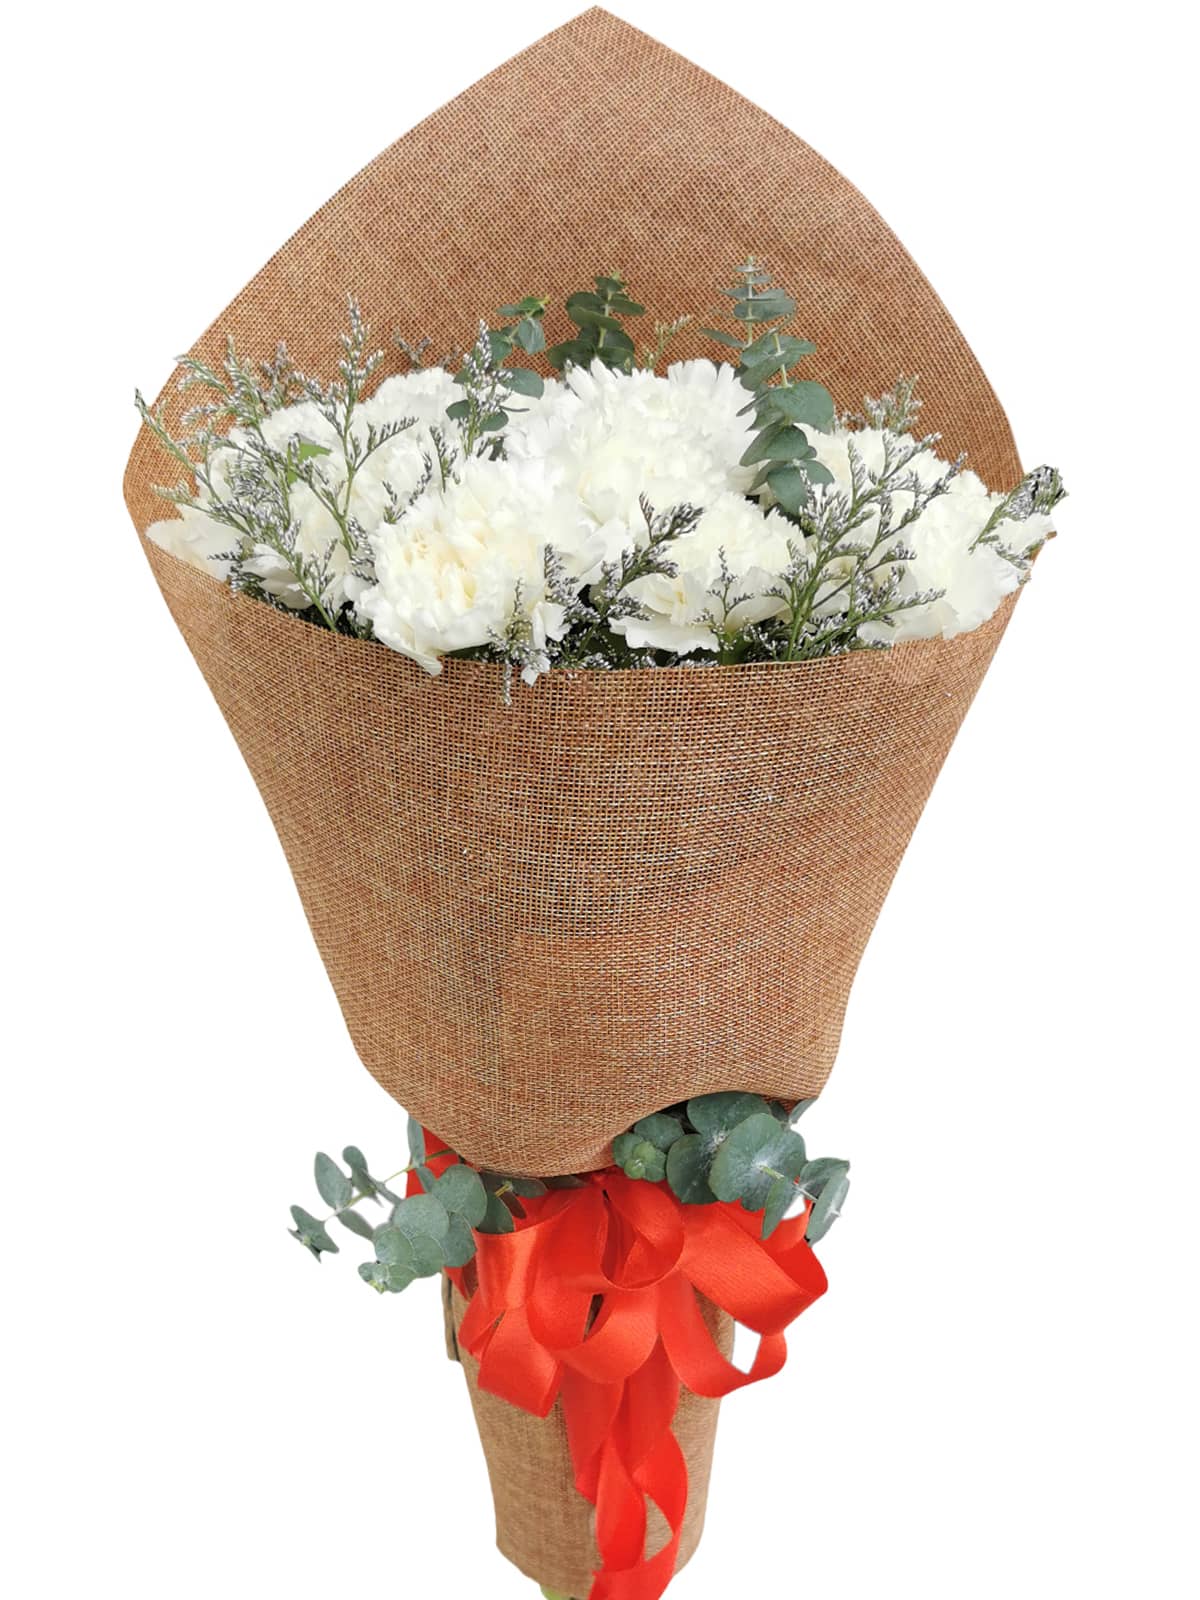 WHITE Carnation Burlap ch